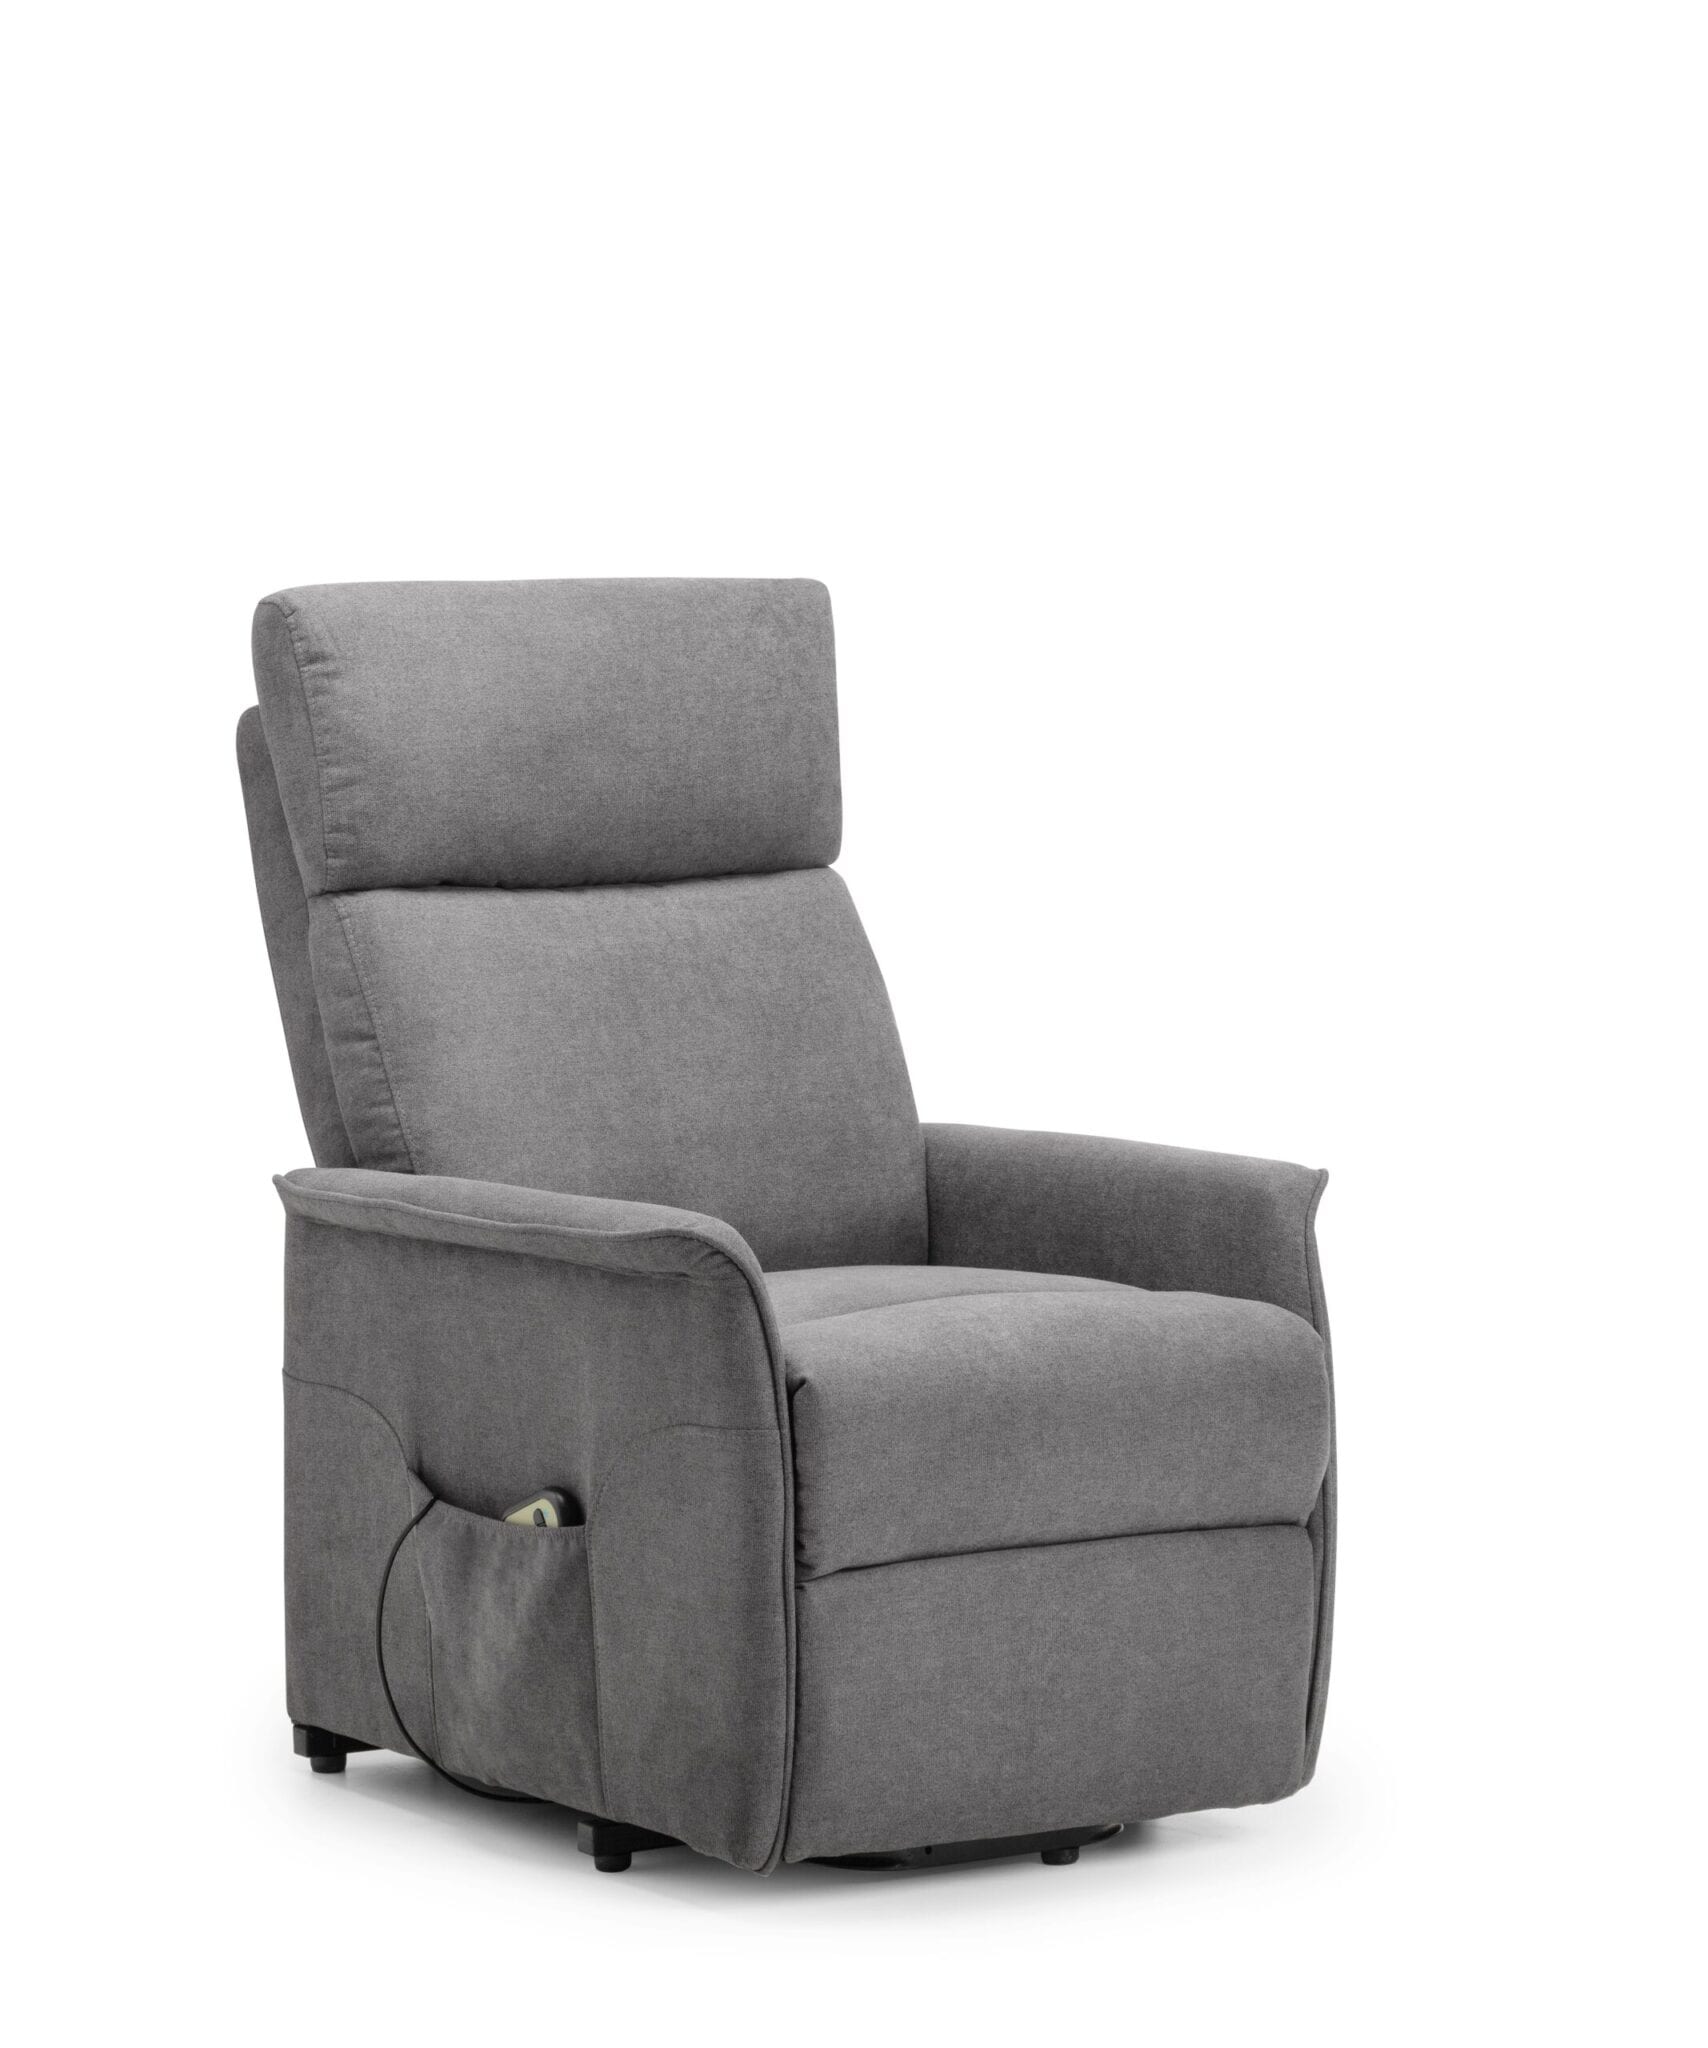 Elena Rise & Recline Chair - Charcoal Fabric